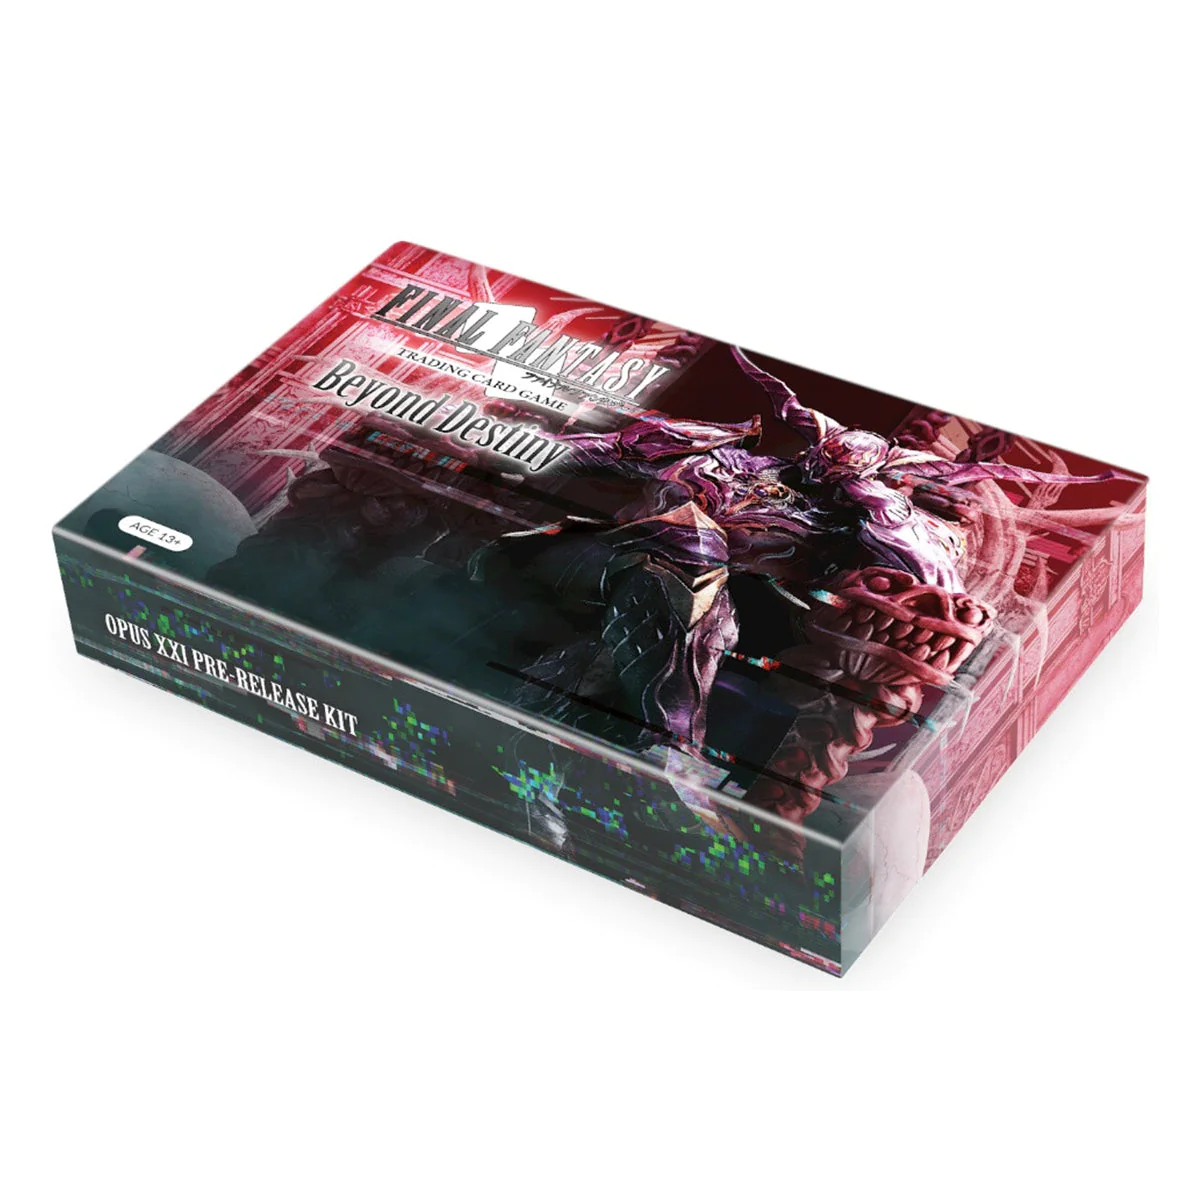 Final Fantasy Trading Card Game Opus XXI - Beyond Destiny Pre-release Kit